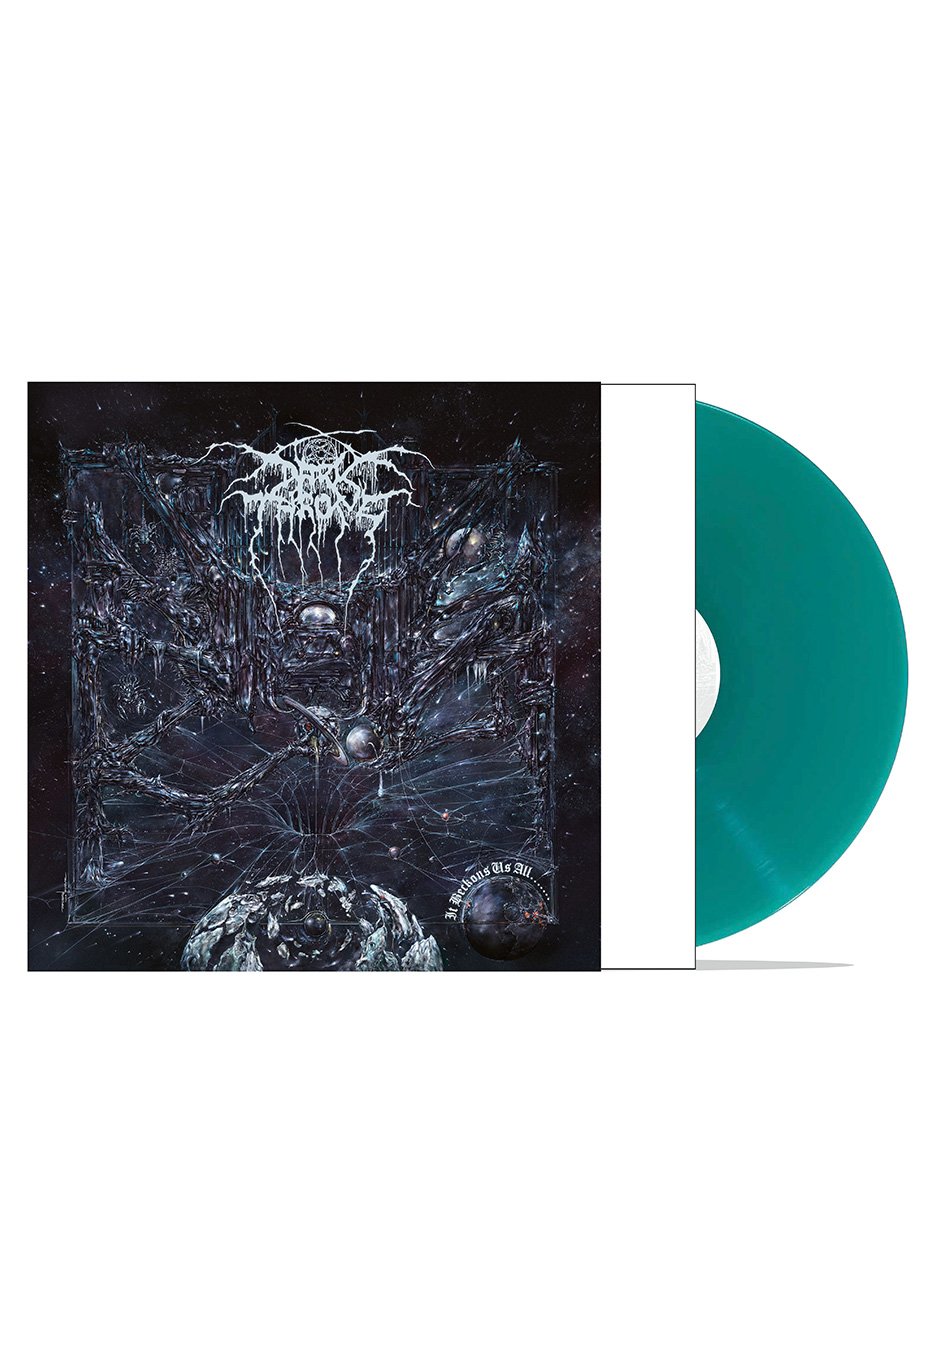 Darkthrone - It Beckons Us All Ltd. Petrol Green - Colored Vinyl